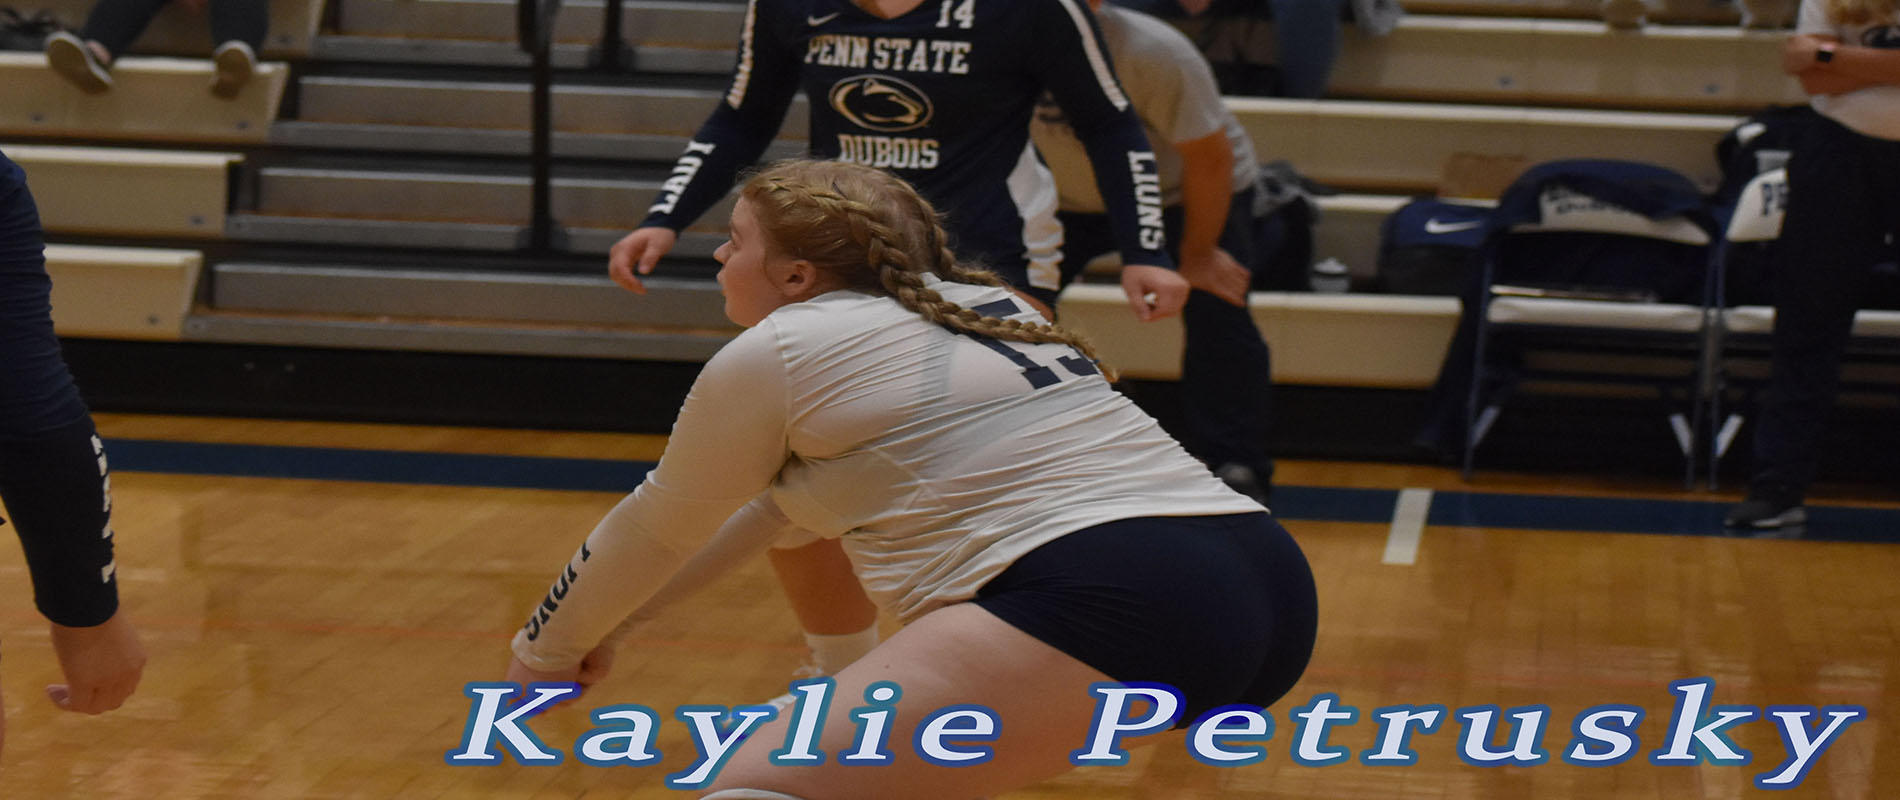 Penn State DuBois' Kaylie Petrusky.